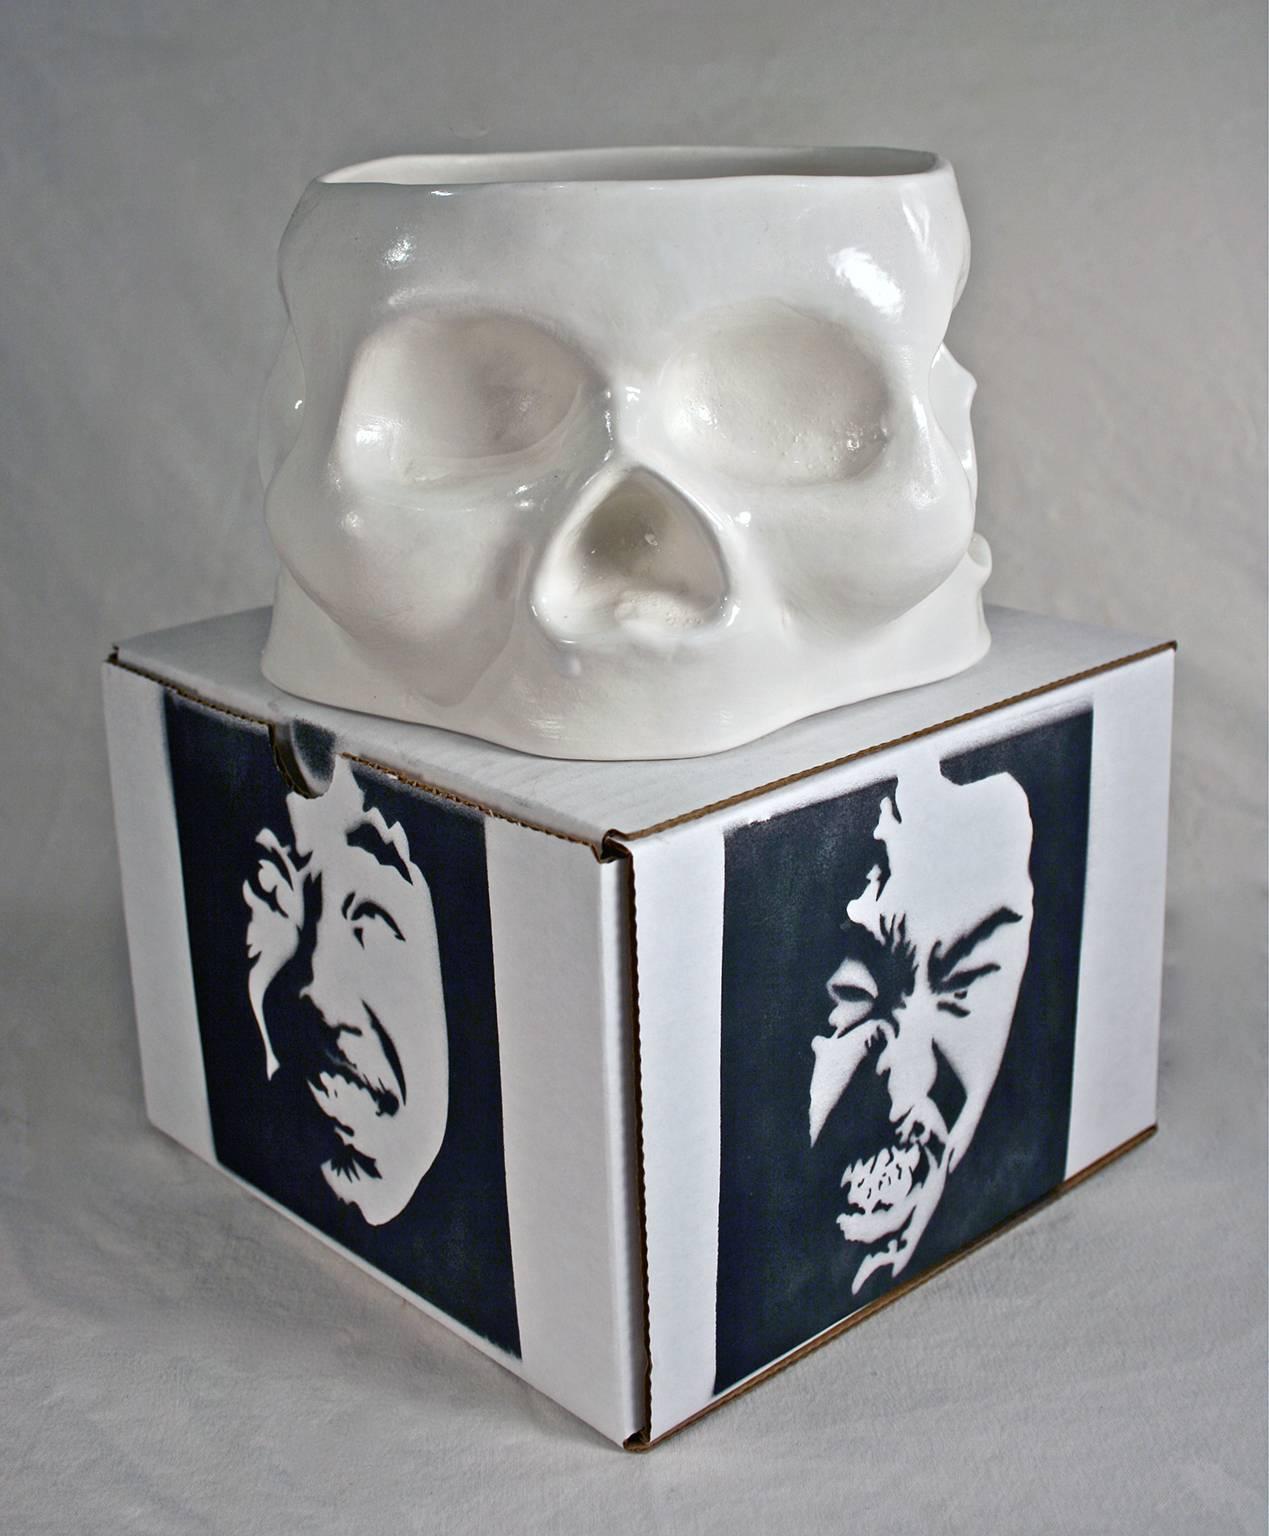 Skulls of Emotion-Delight, Anger, Sorrow, Pleasure - Sculpture by Kenjiro Kitade